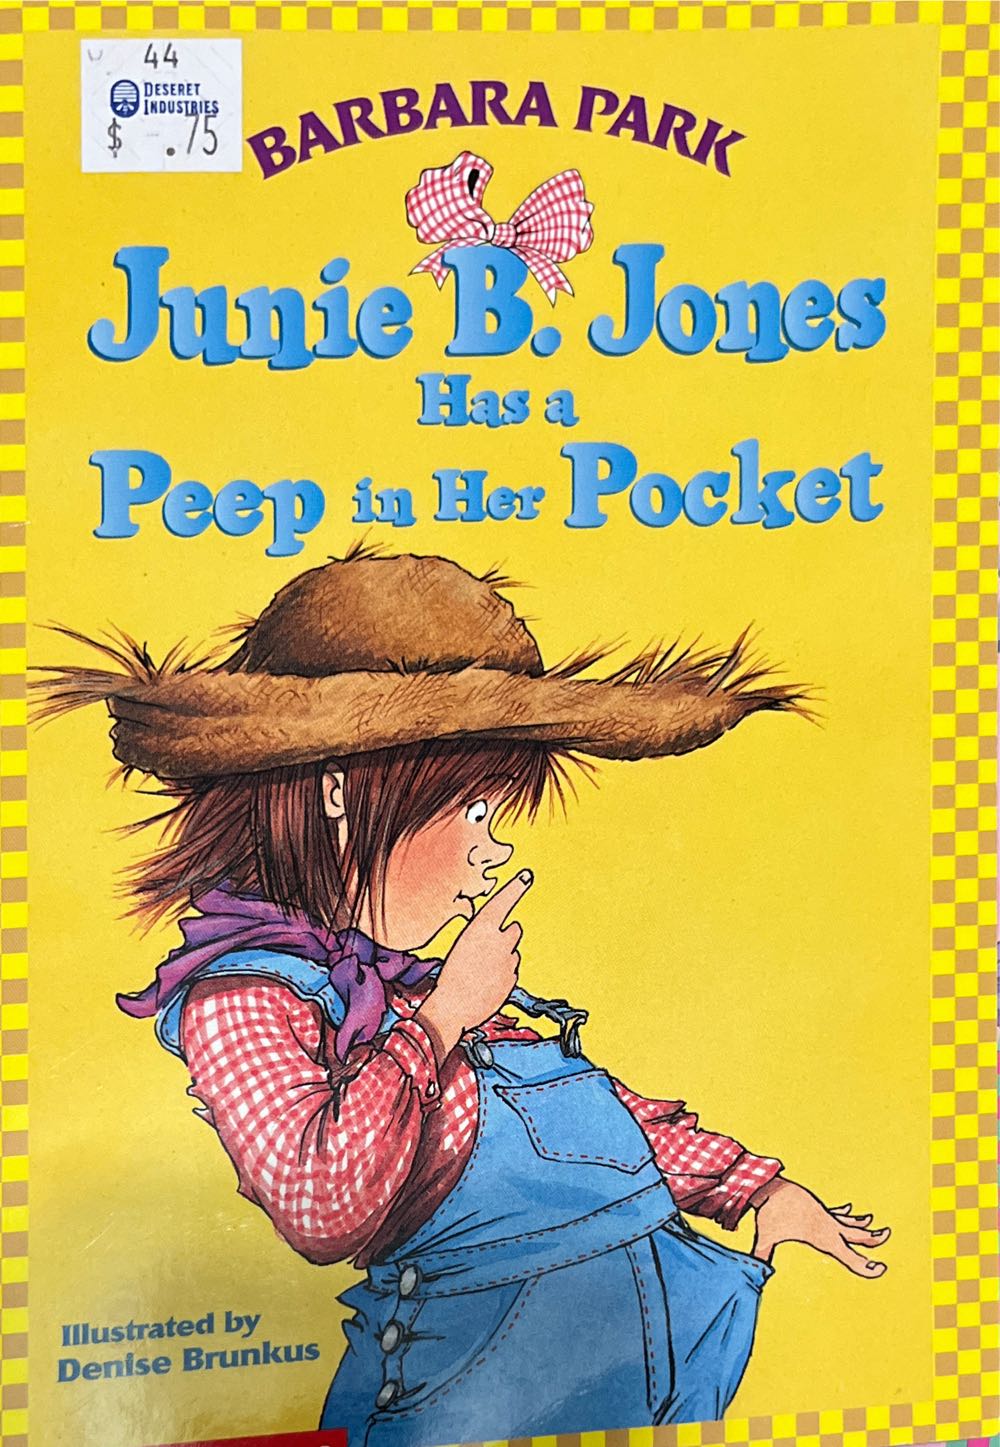 Junie B. Jones Has A Peep In Her Pocket - Barbara Park (Scholastic Inc. - Paperback) book collectible [Barcode 9780439223096] - Main Image 4